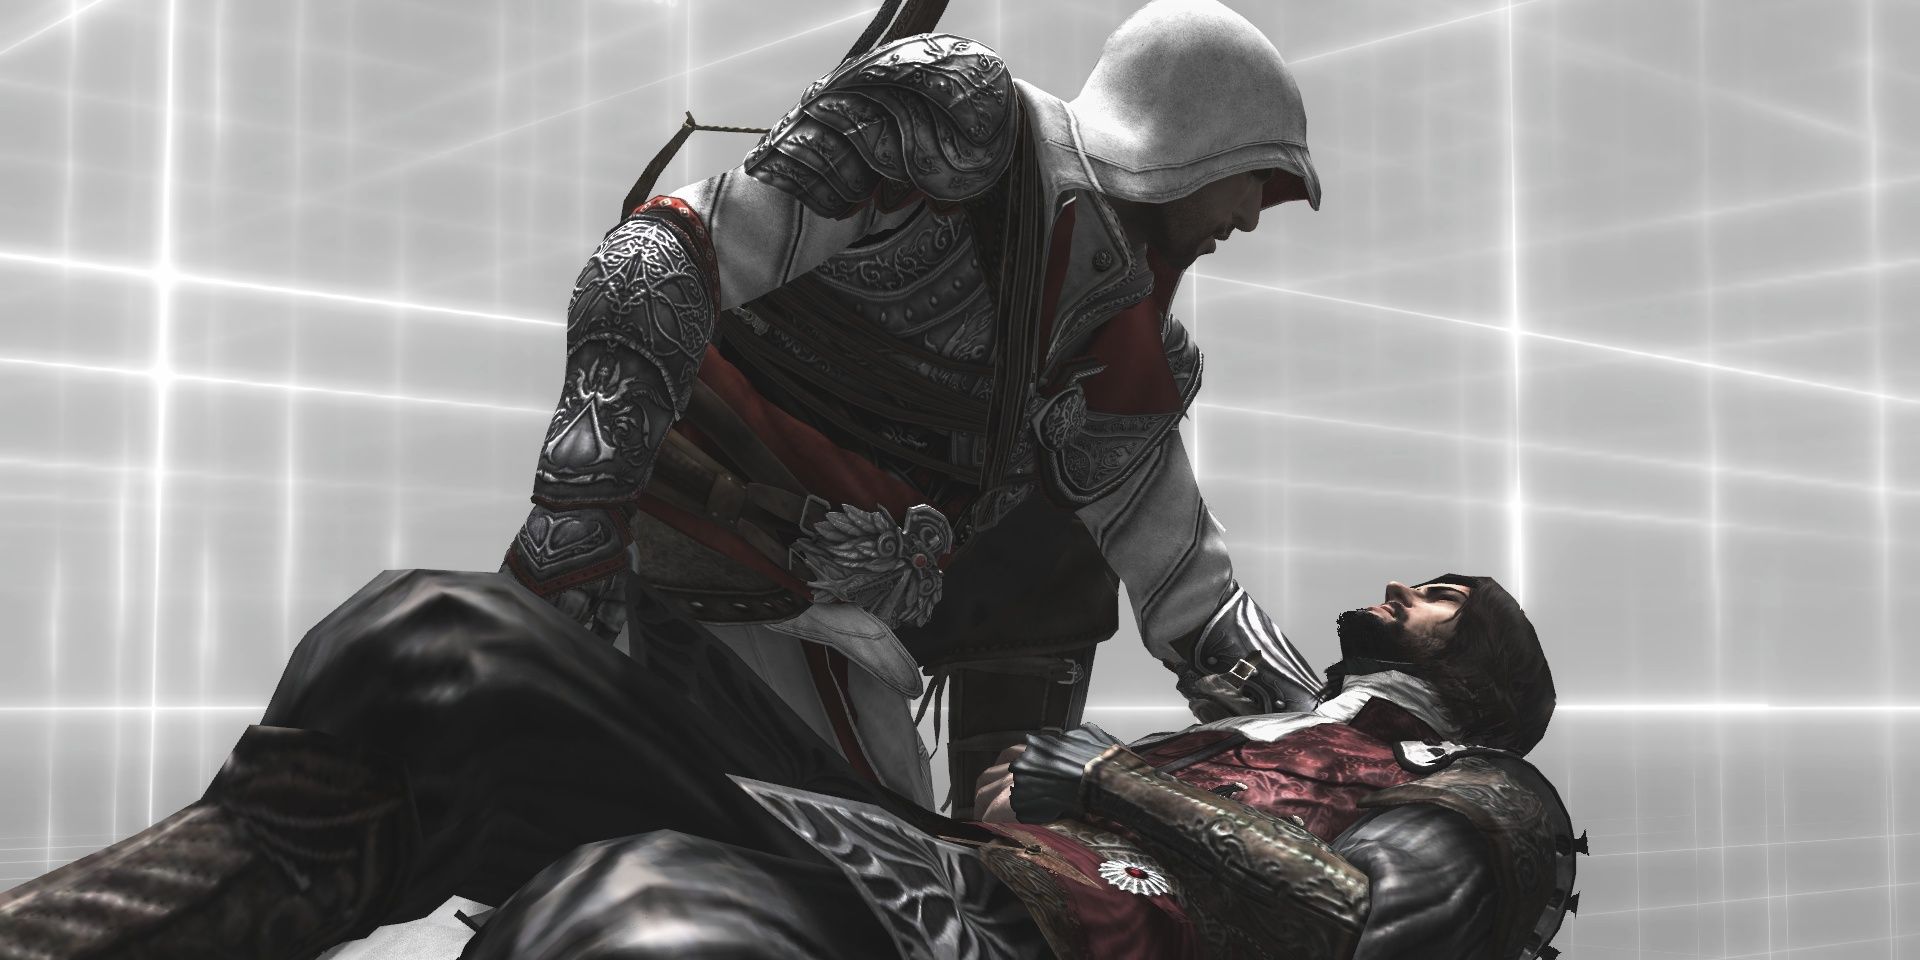 Ezio Auditore after taking the life of Cesare Borgia